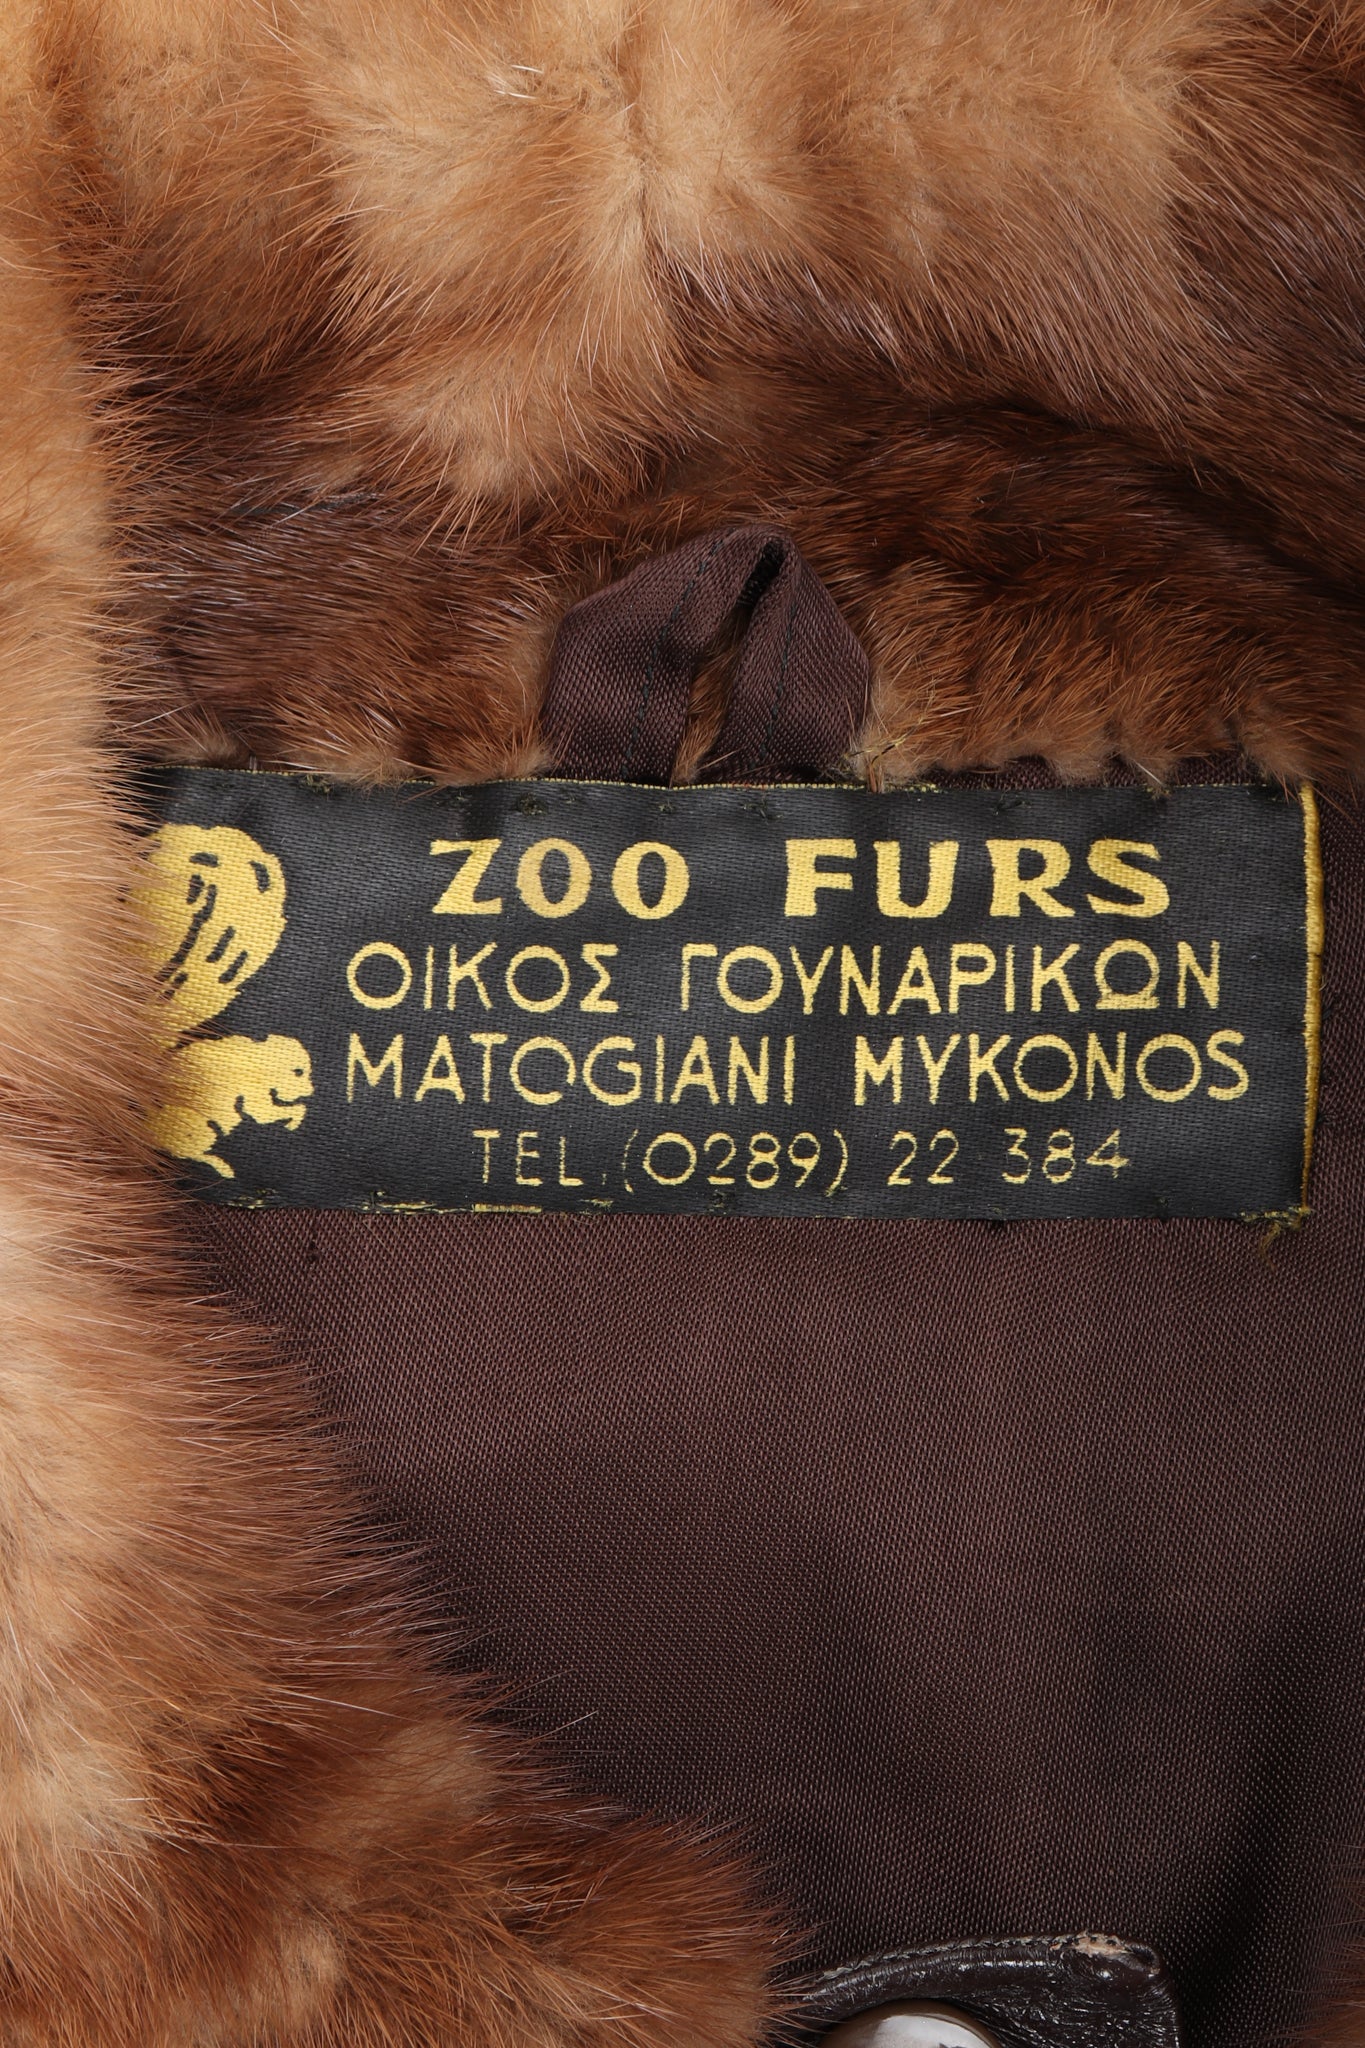 Vintage Zoo Furs label on fur